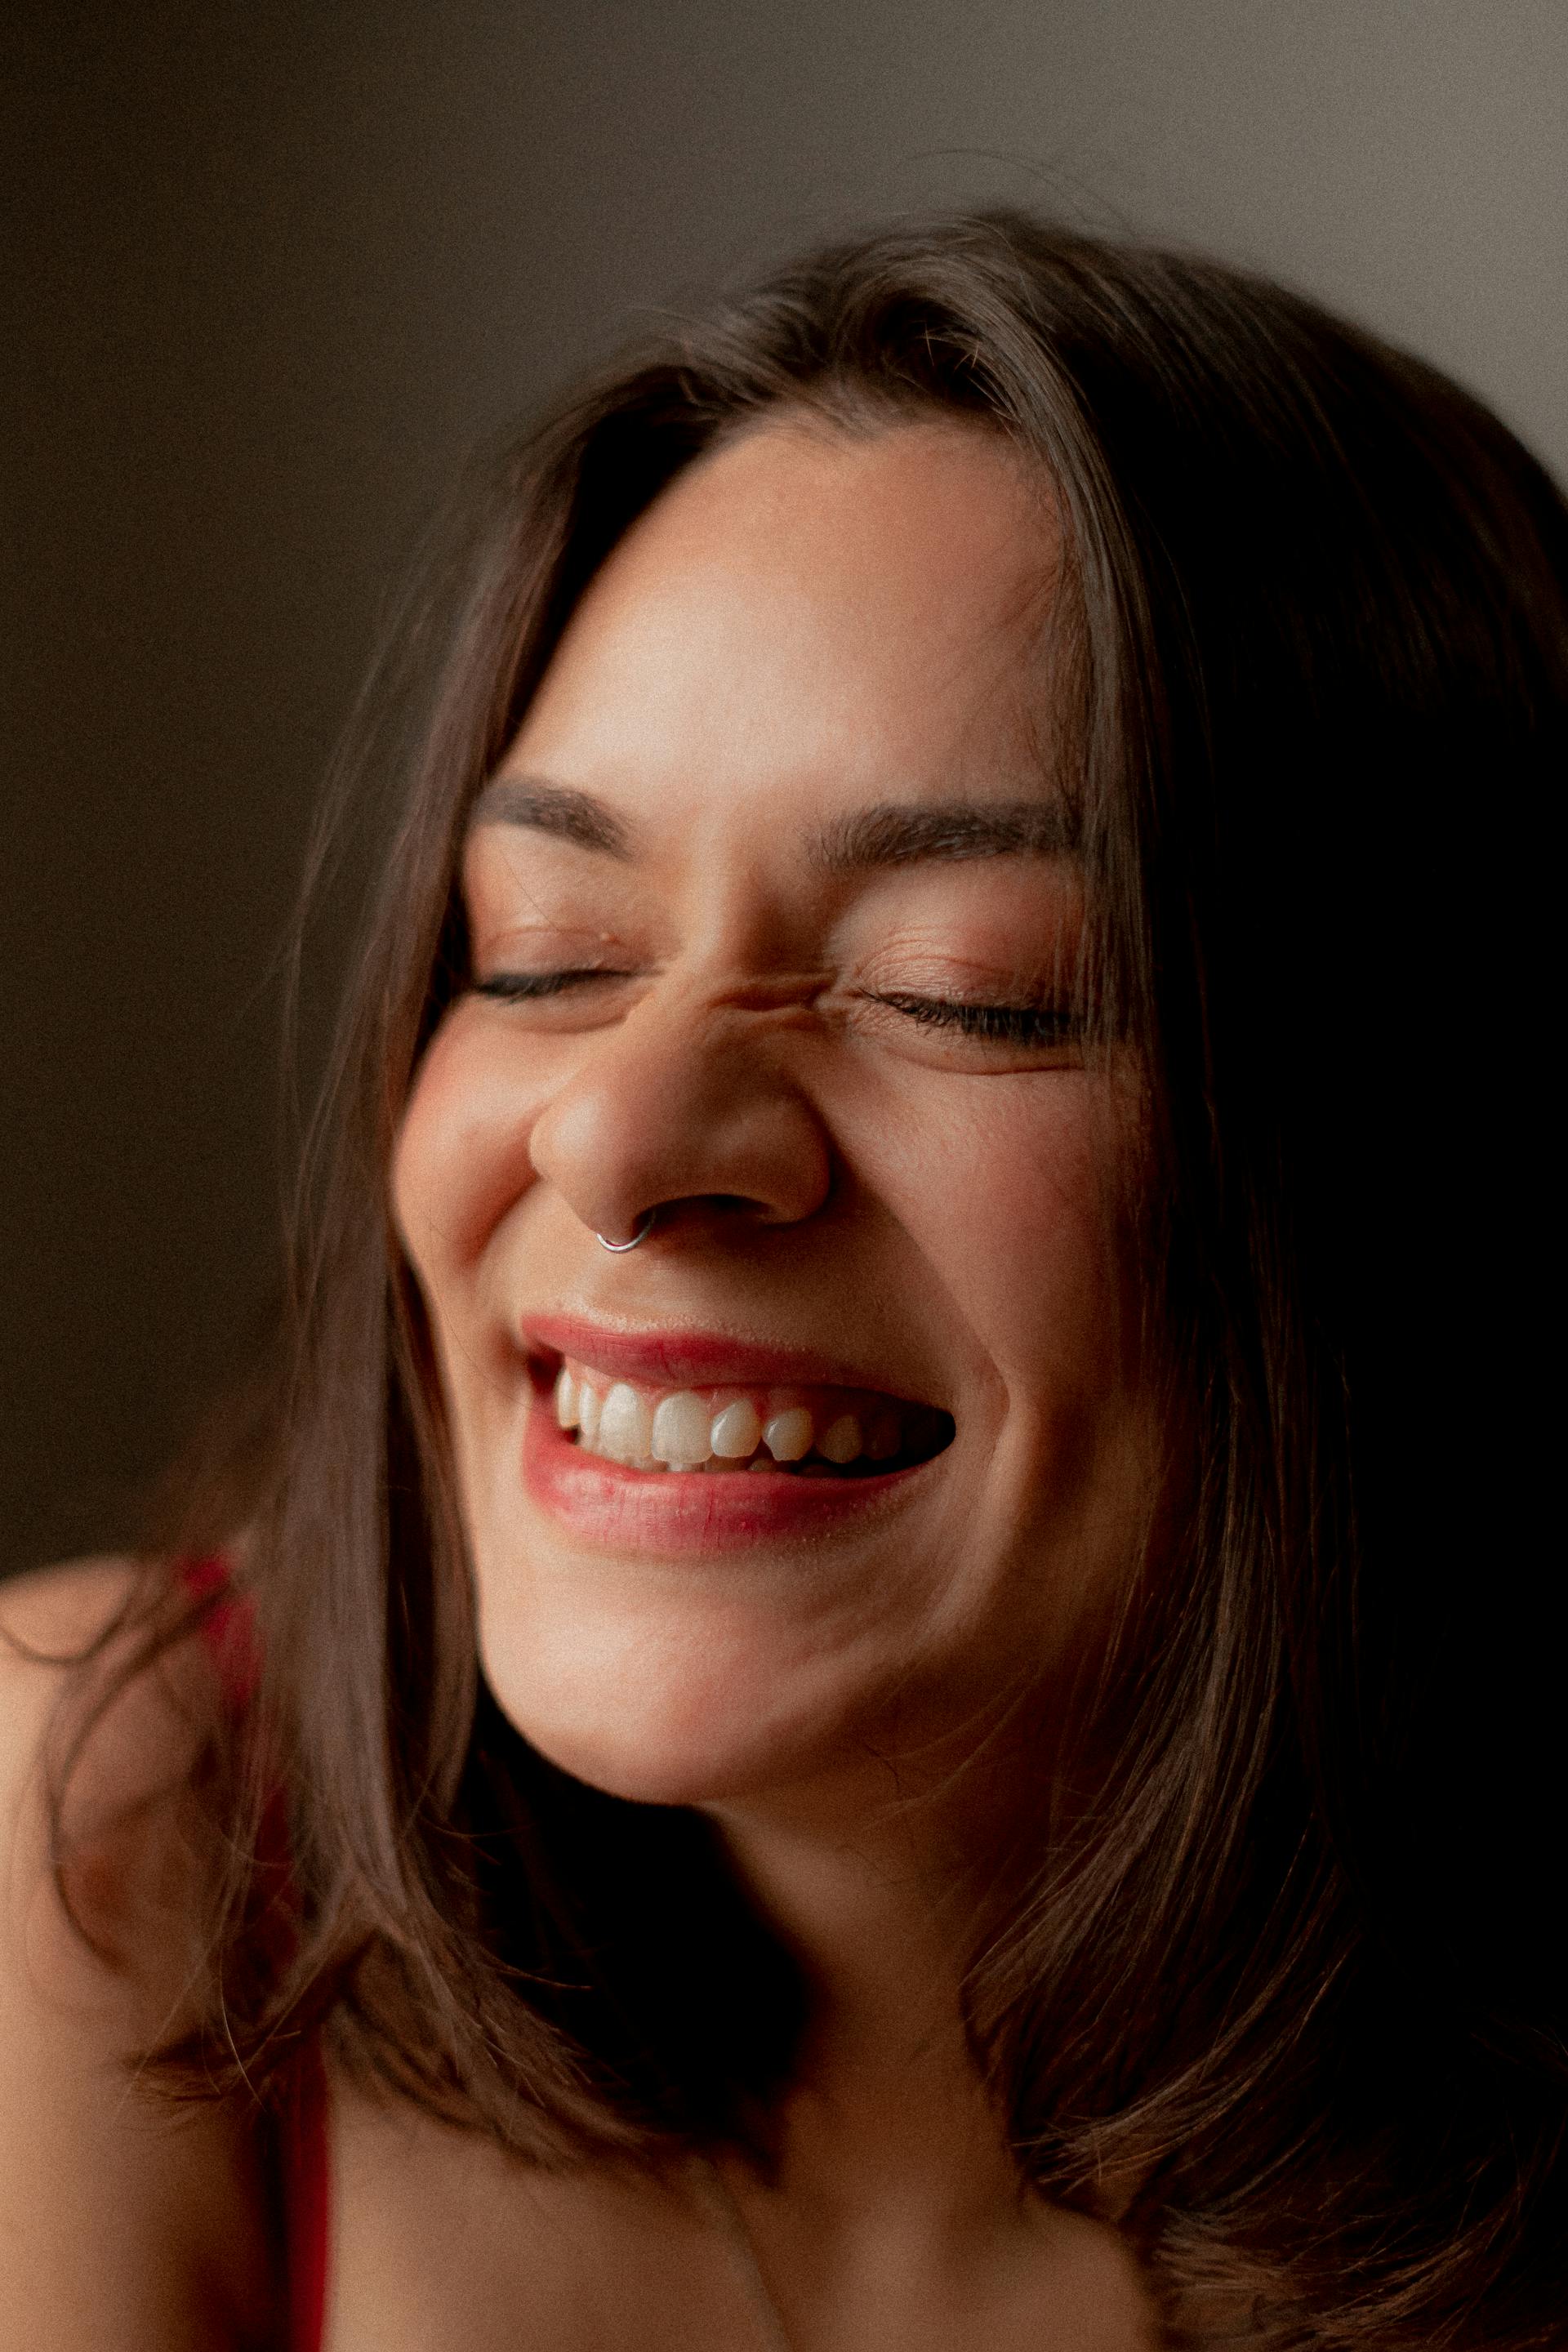 Eine lachende brünette Frau | Quelle: Pexels